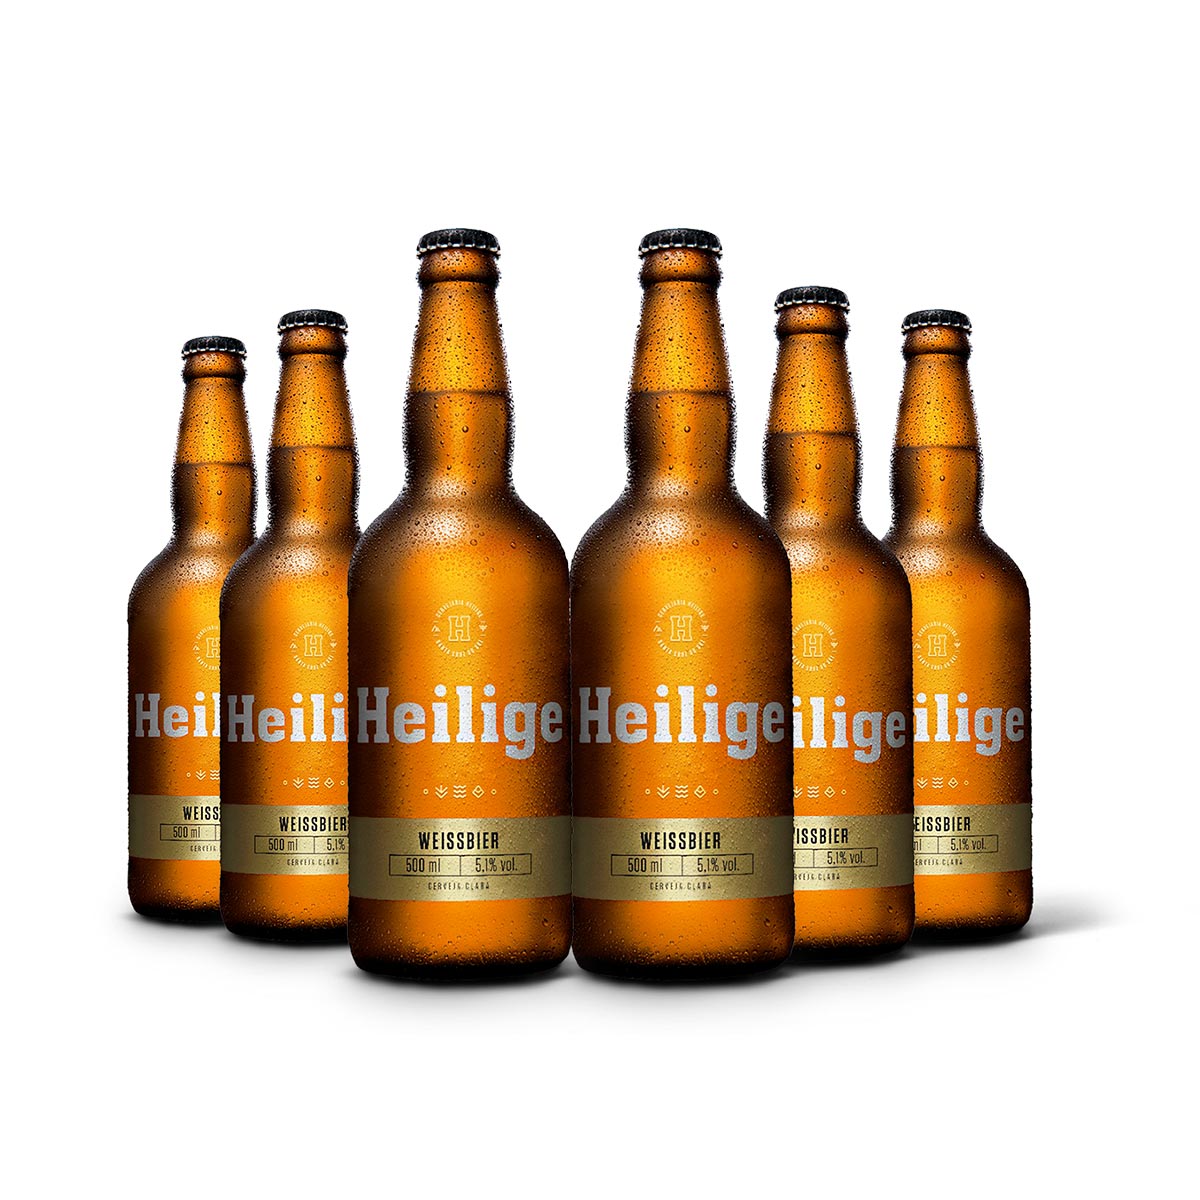 Pack Heilige Weissbier 6 cervejas 500ml